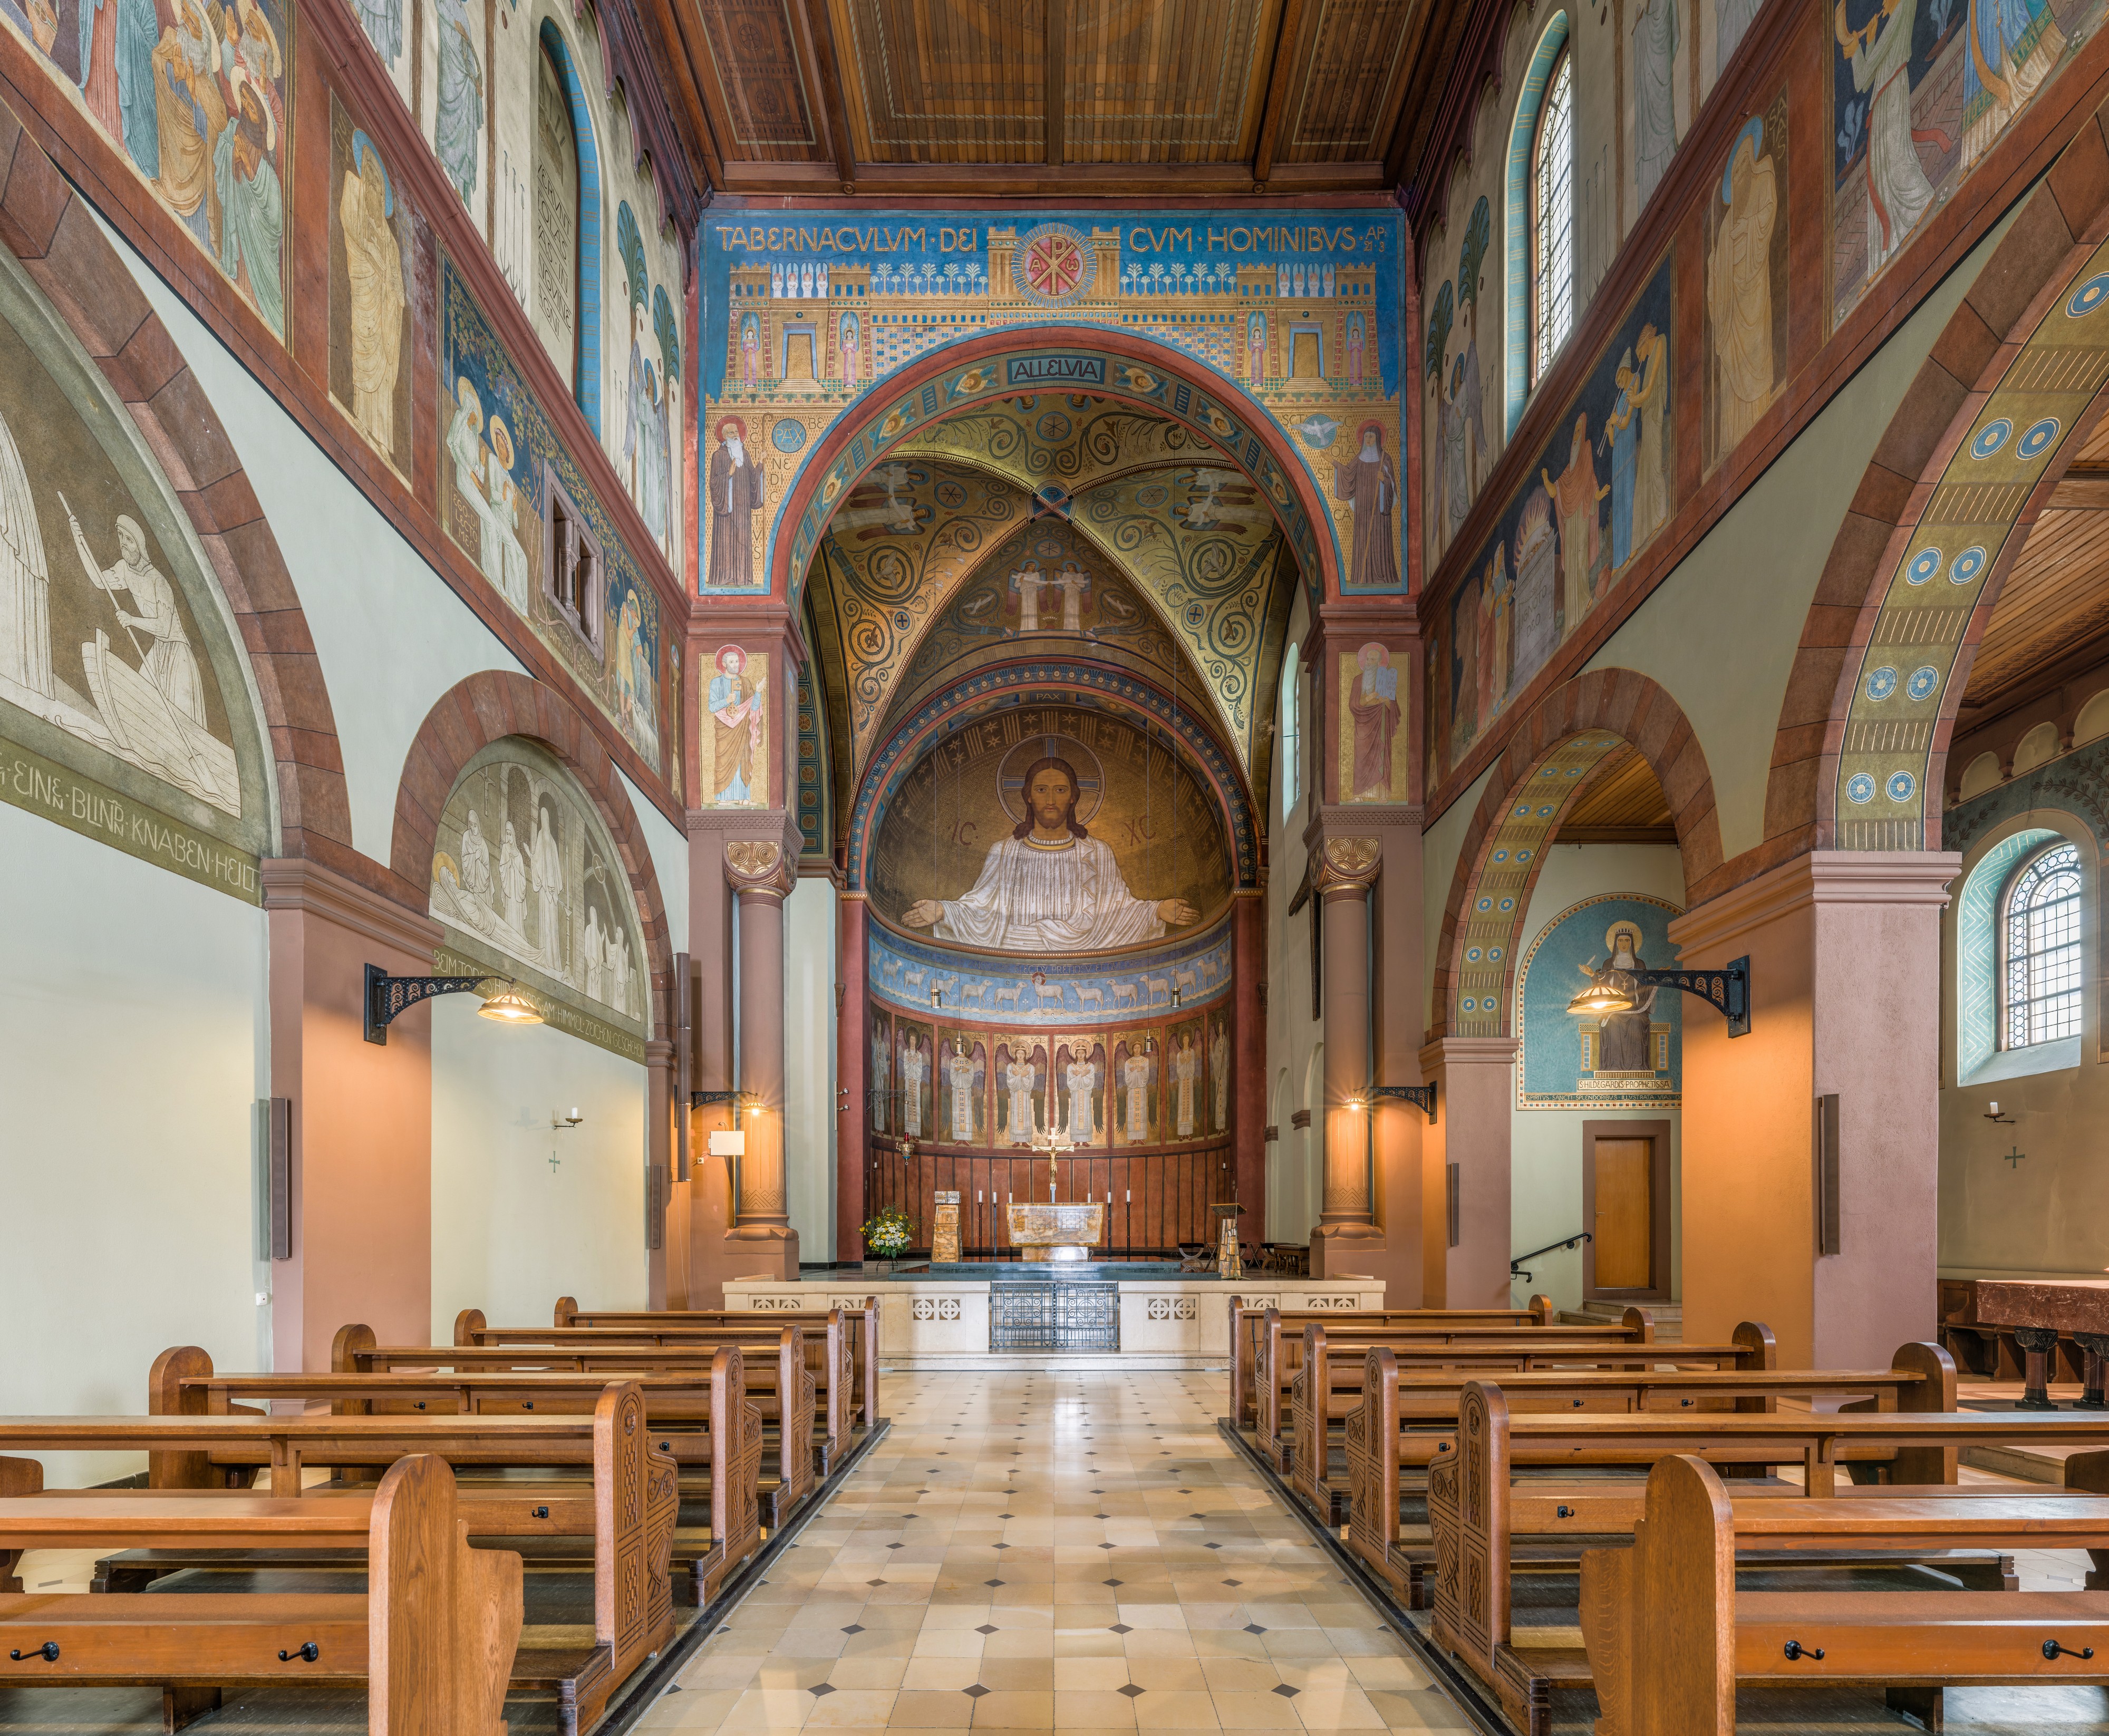 Abtei St. Hildegard, Rüdesheim, Nave and Sanctuary b 20140922 1